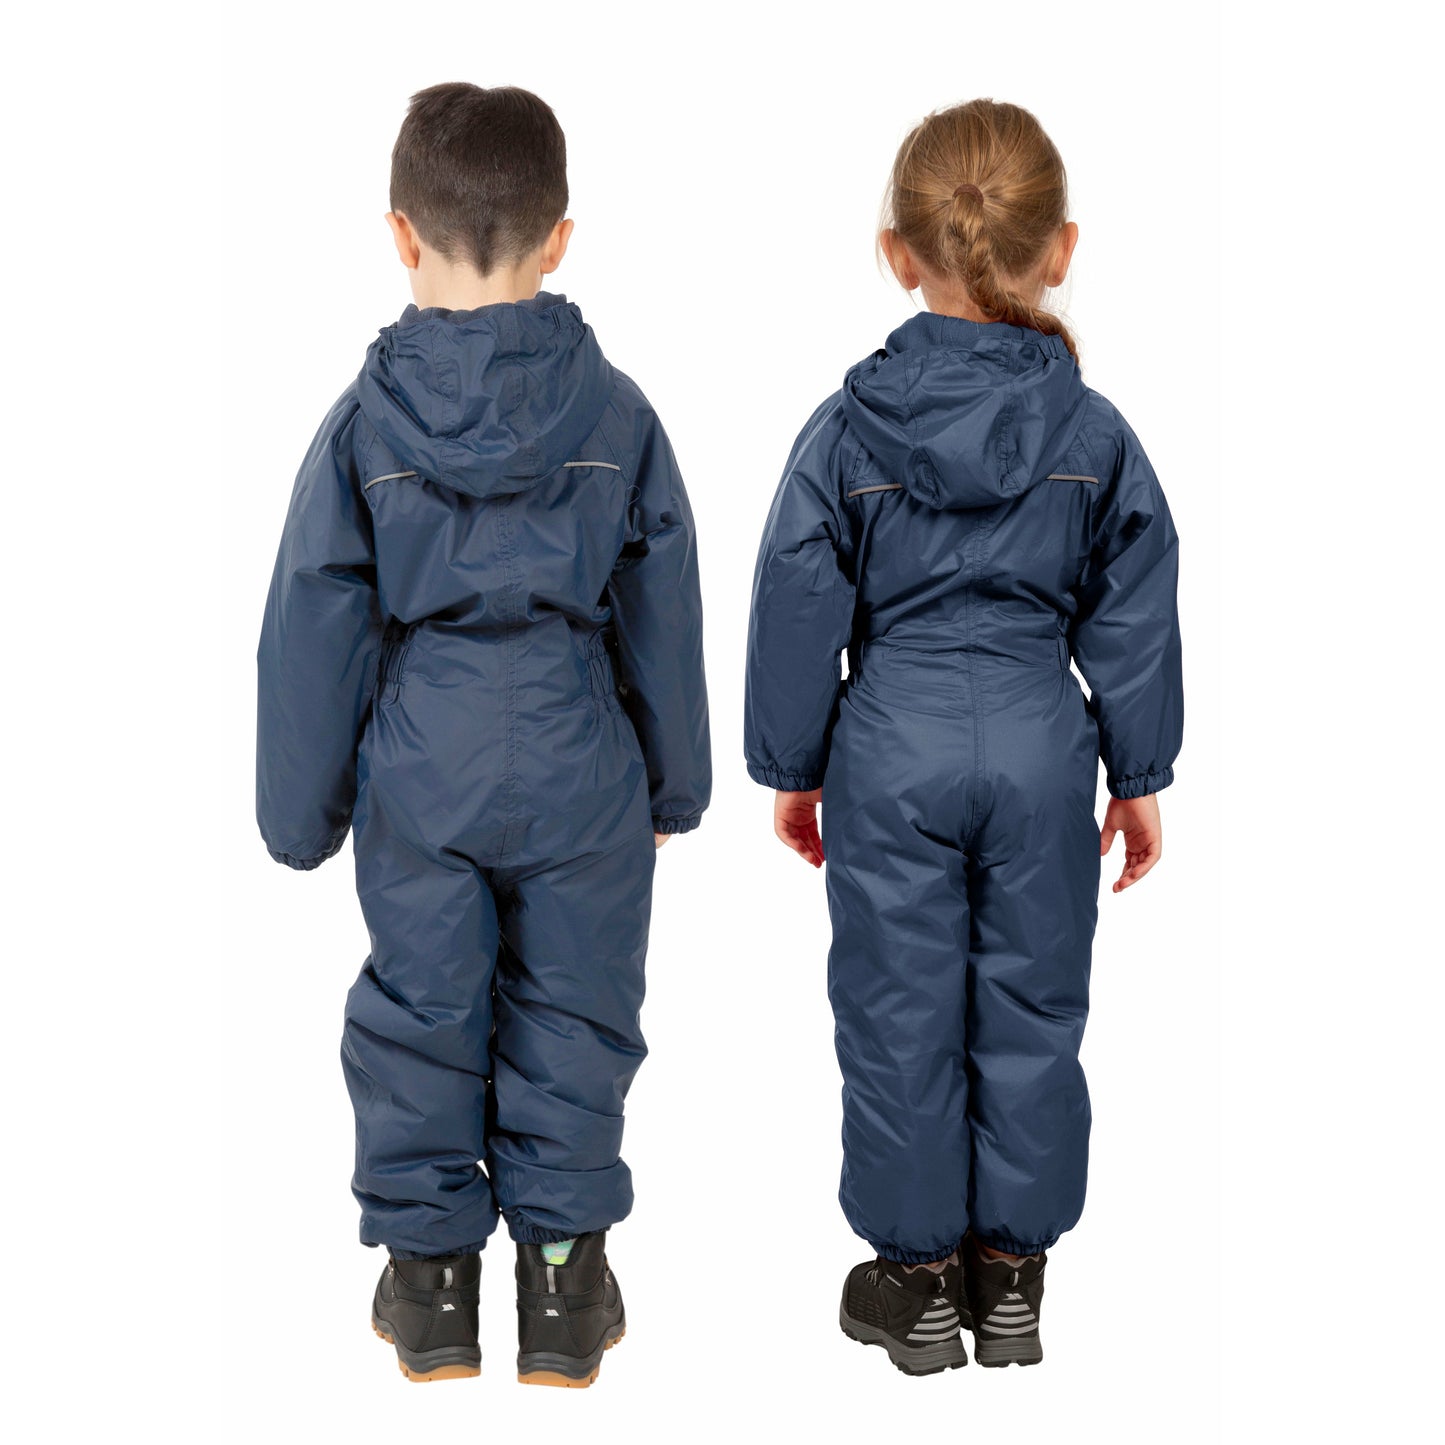 DripDrop Childs Padded Waterproof Rain Suit in Navy